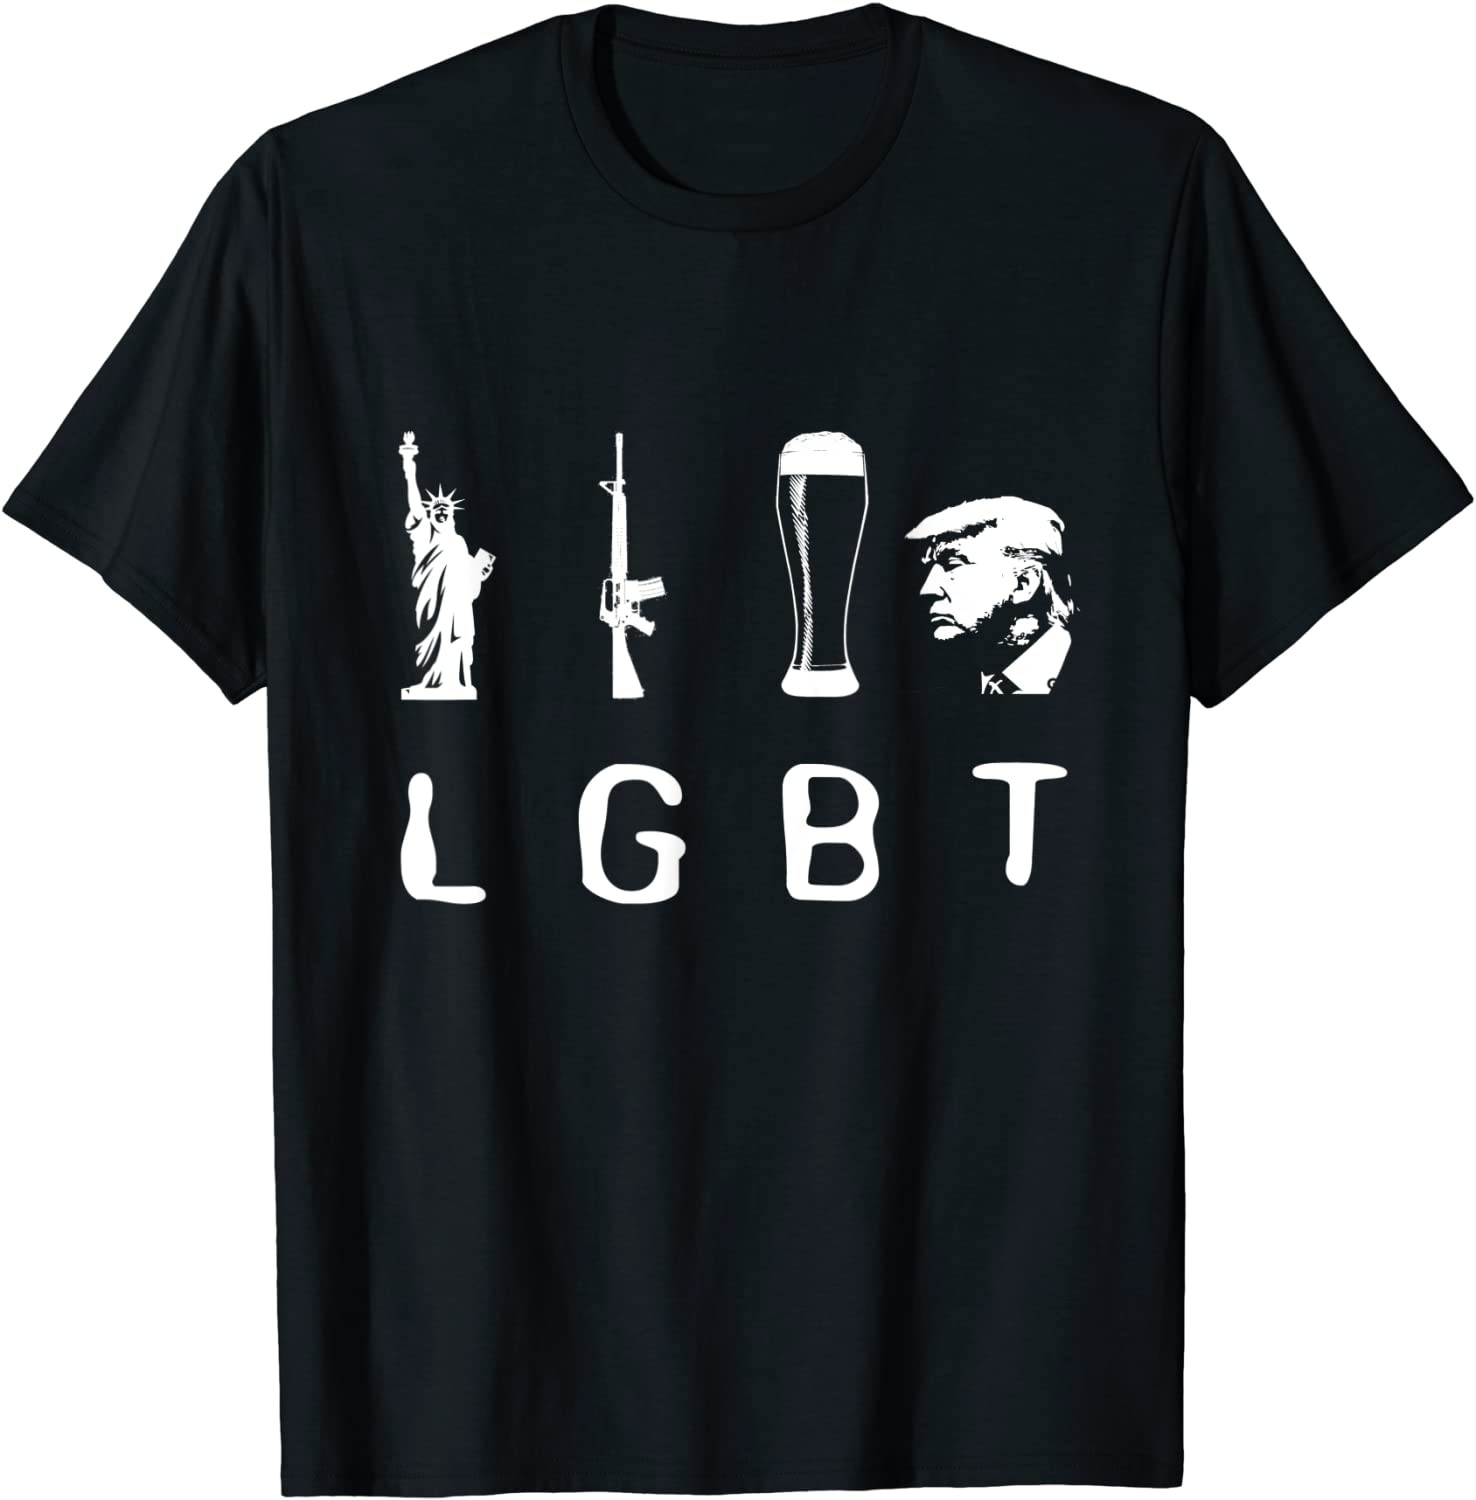 Liberty Guns Beer Trump T-Shirt